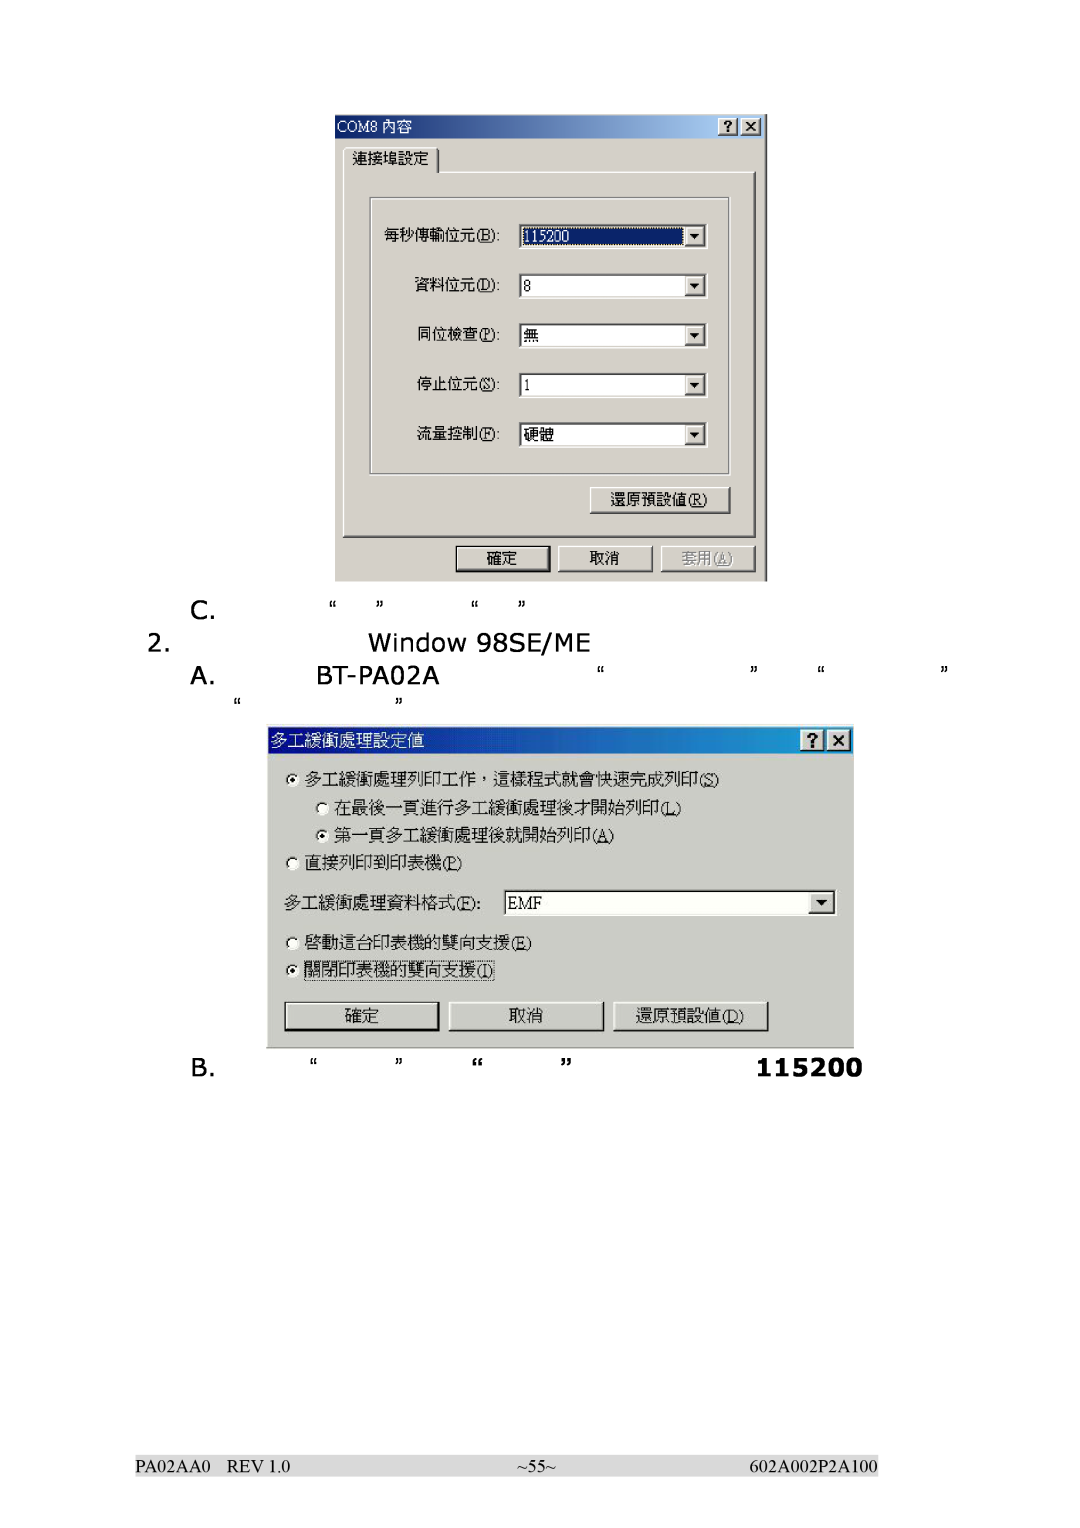 EPoX Computer manual C. “”“”, Window 98SE/ME, A. BT-PA02A “ ” “” “” B. “”“”, PA02AA0 REV, ~55~, 602A002P2A100 